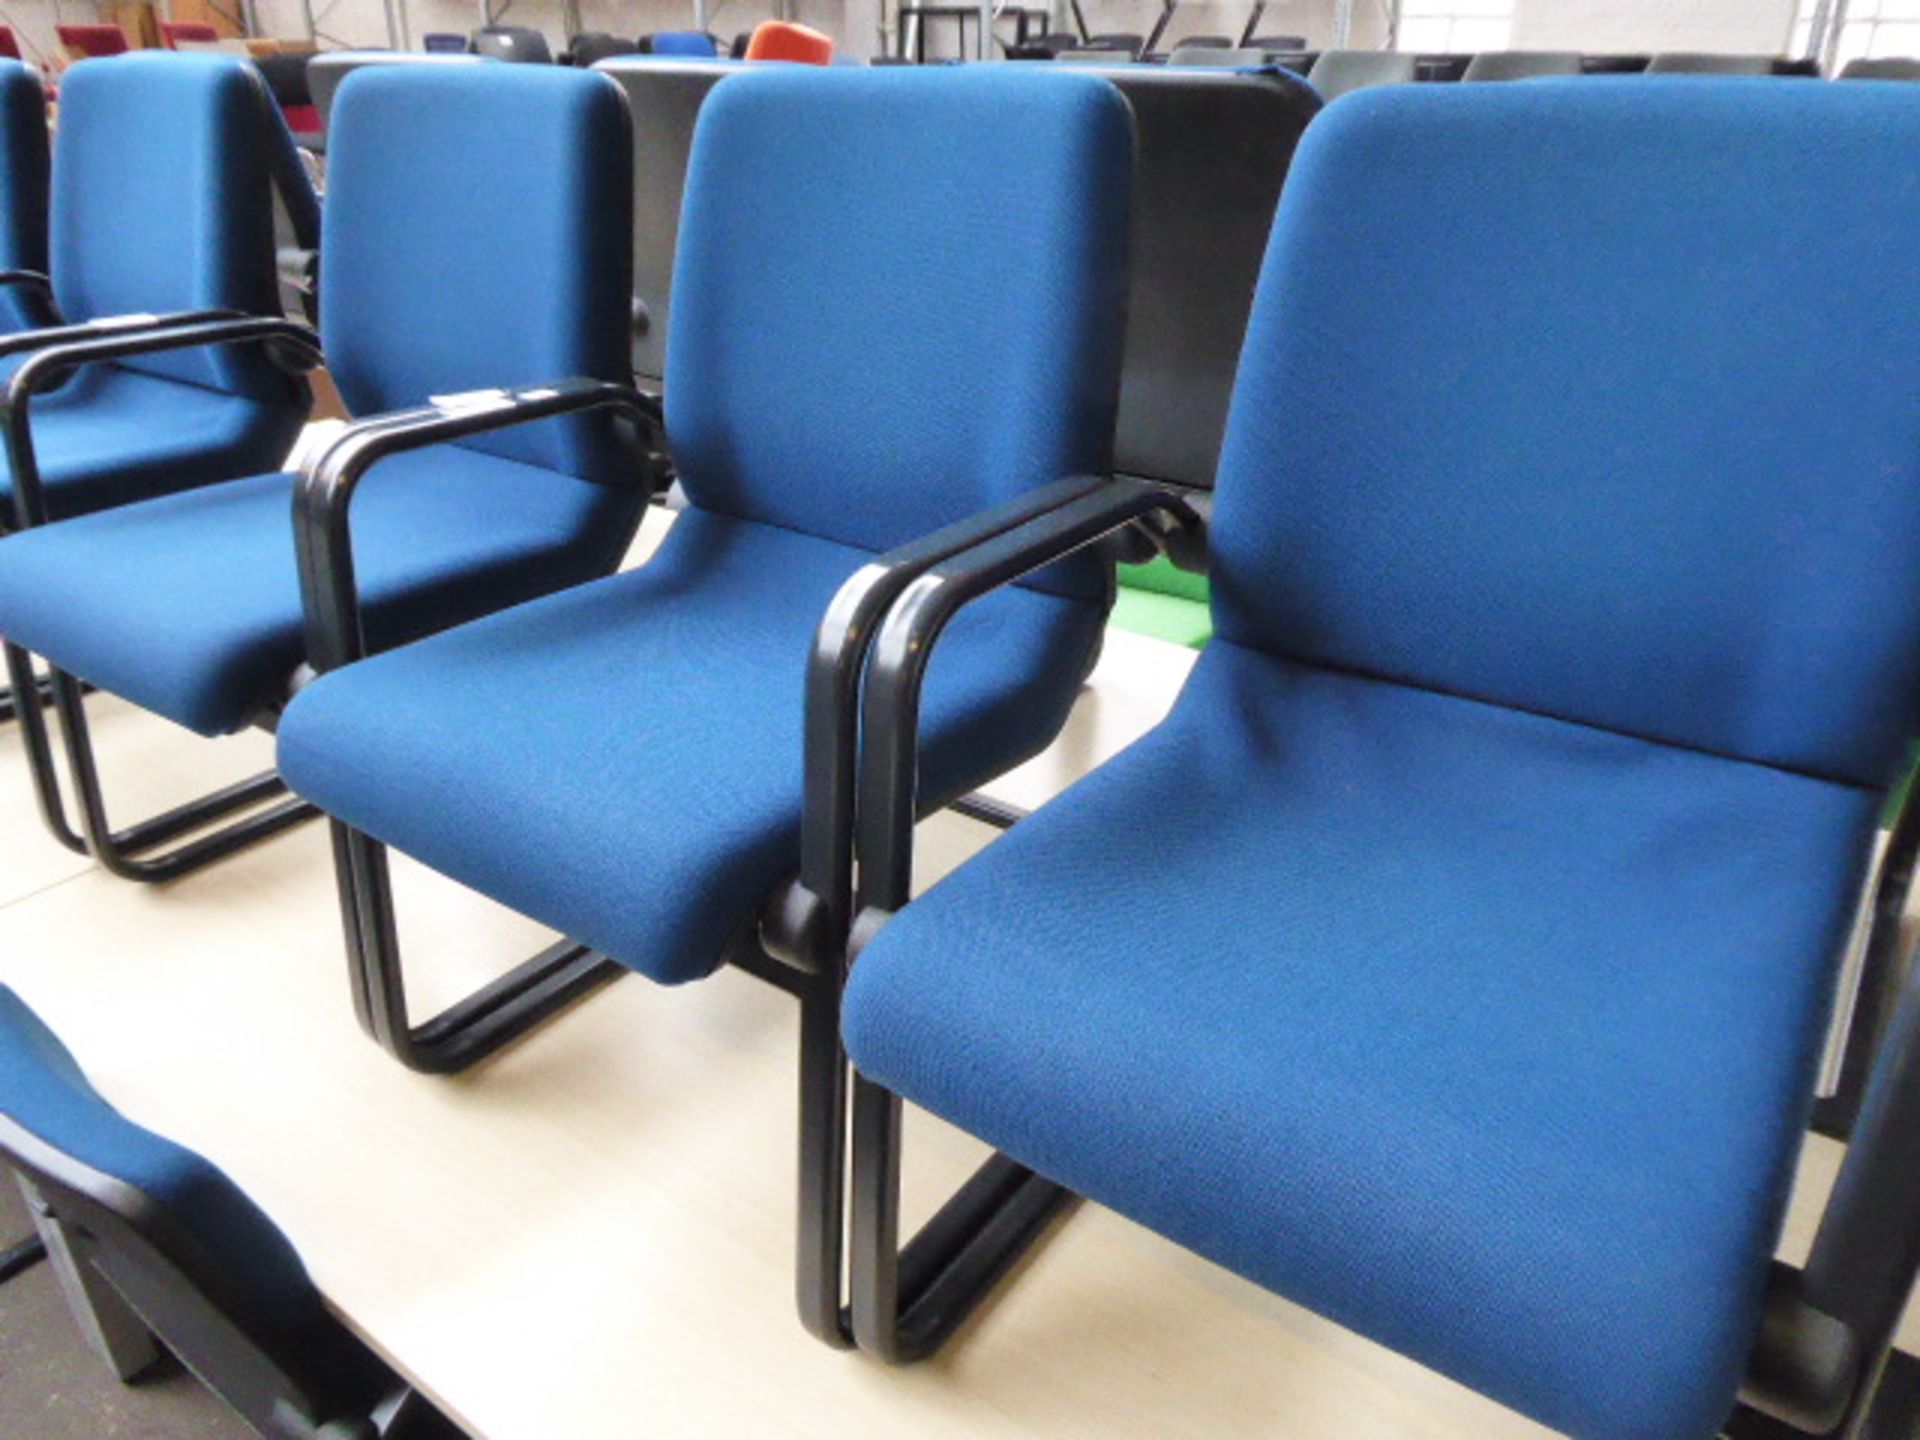 6 Ahrand blue cloth canterlever chairs